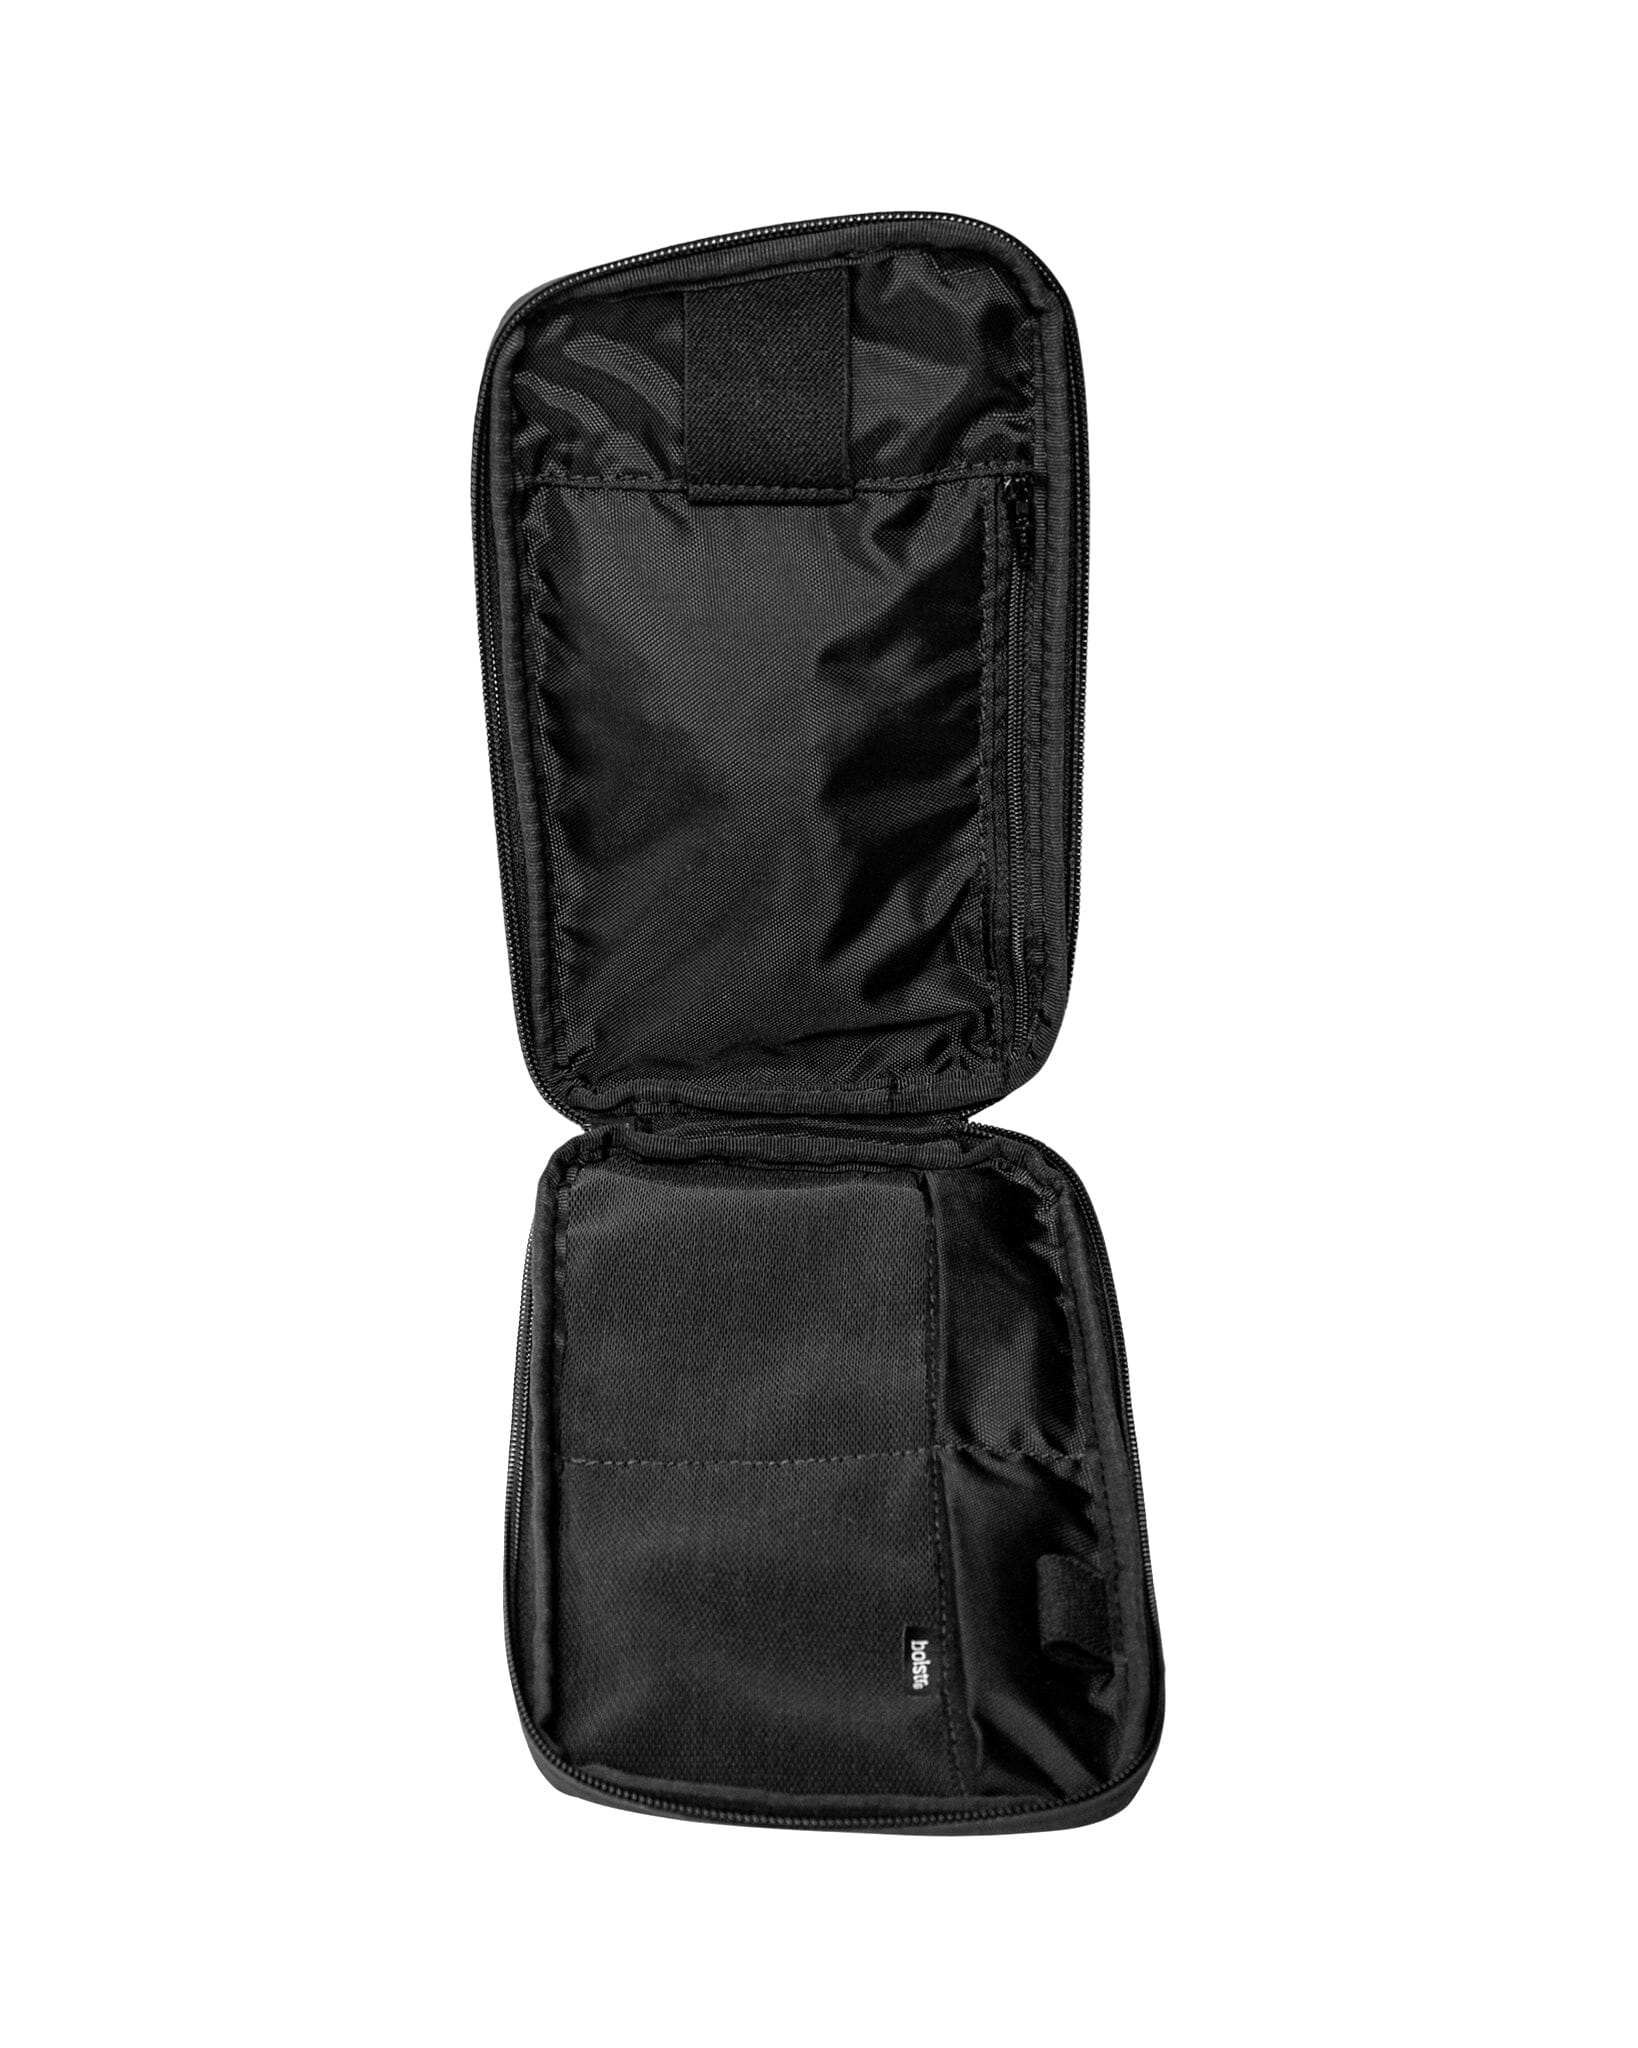 AUX™ Pocket - Black Dyneema Bag bolstr   